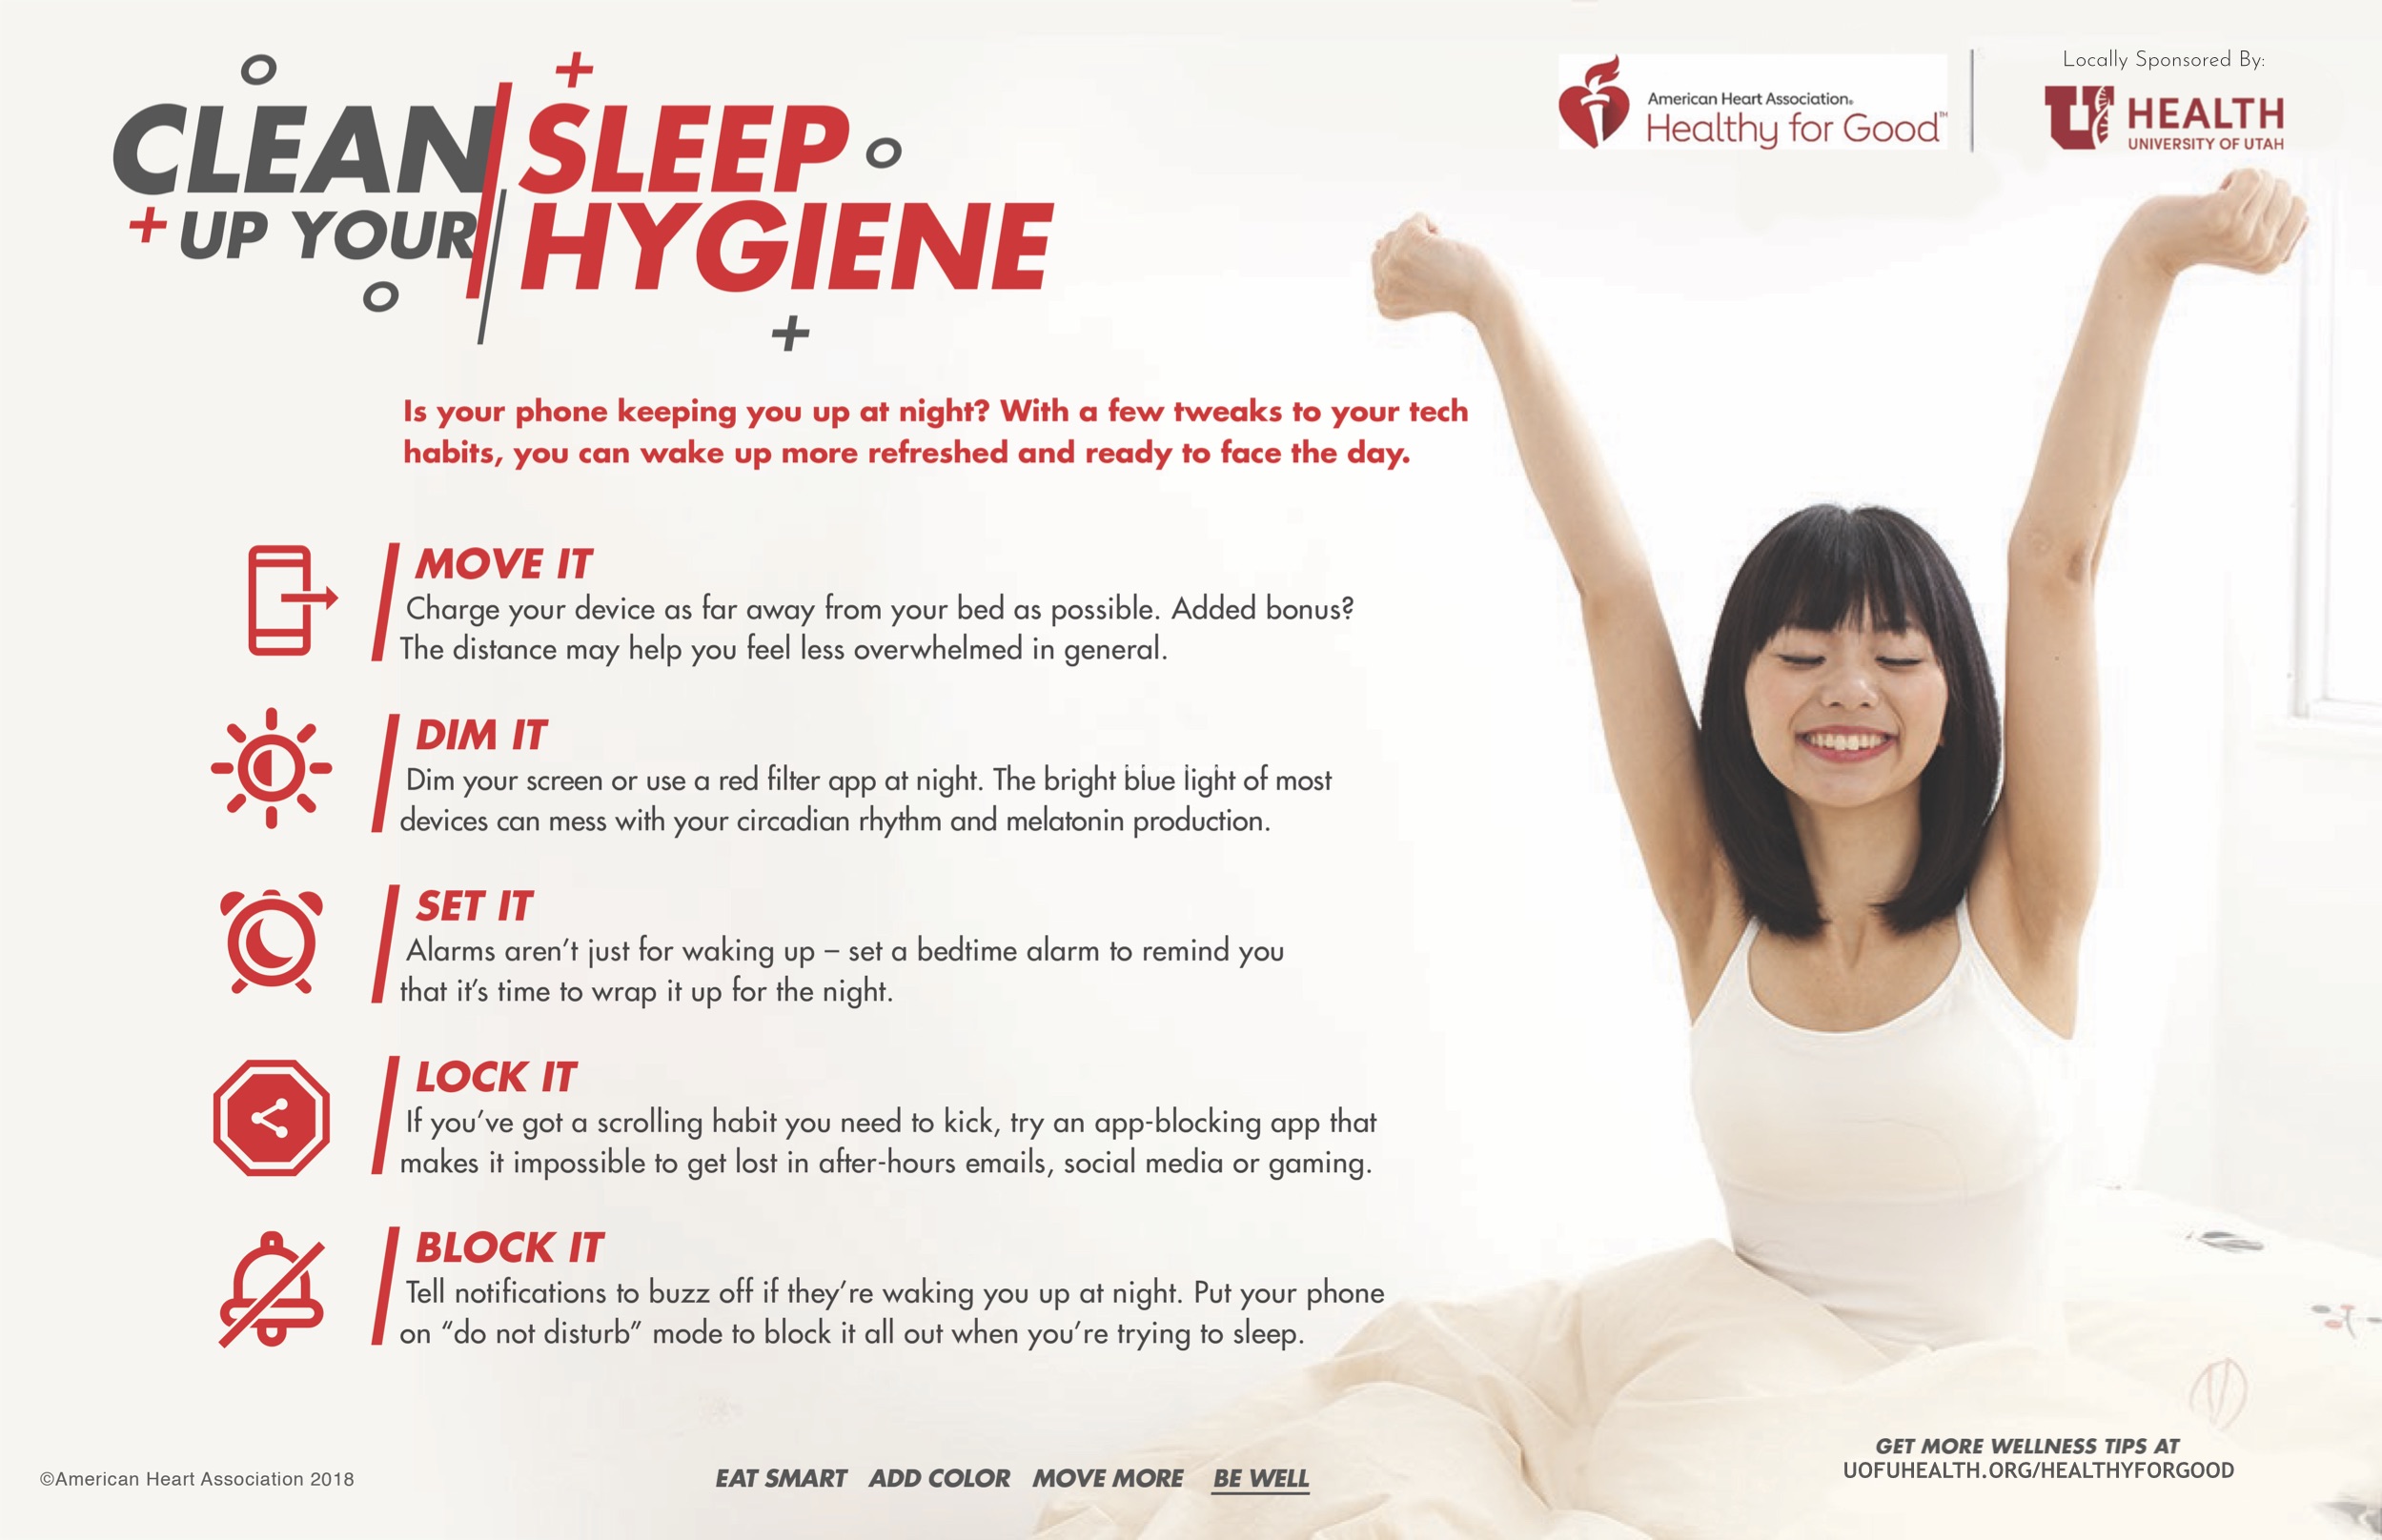 Sleep hygiene practices for better health